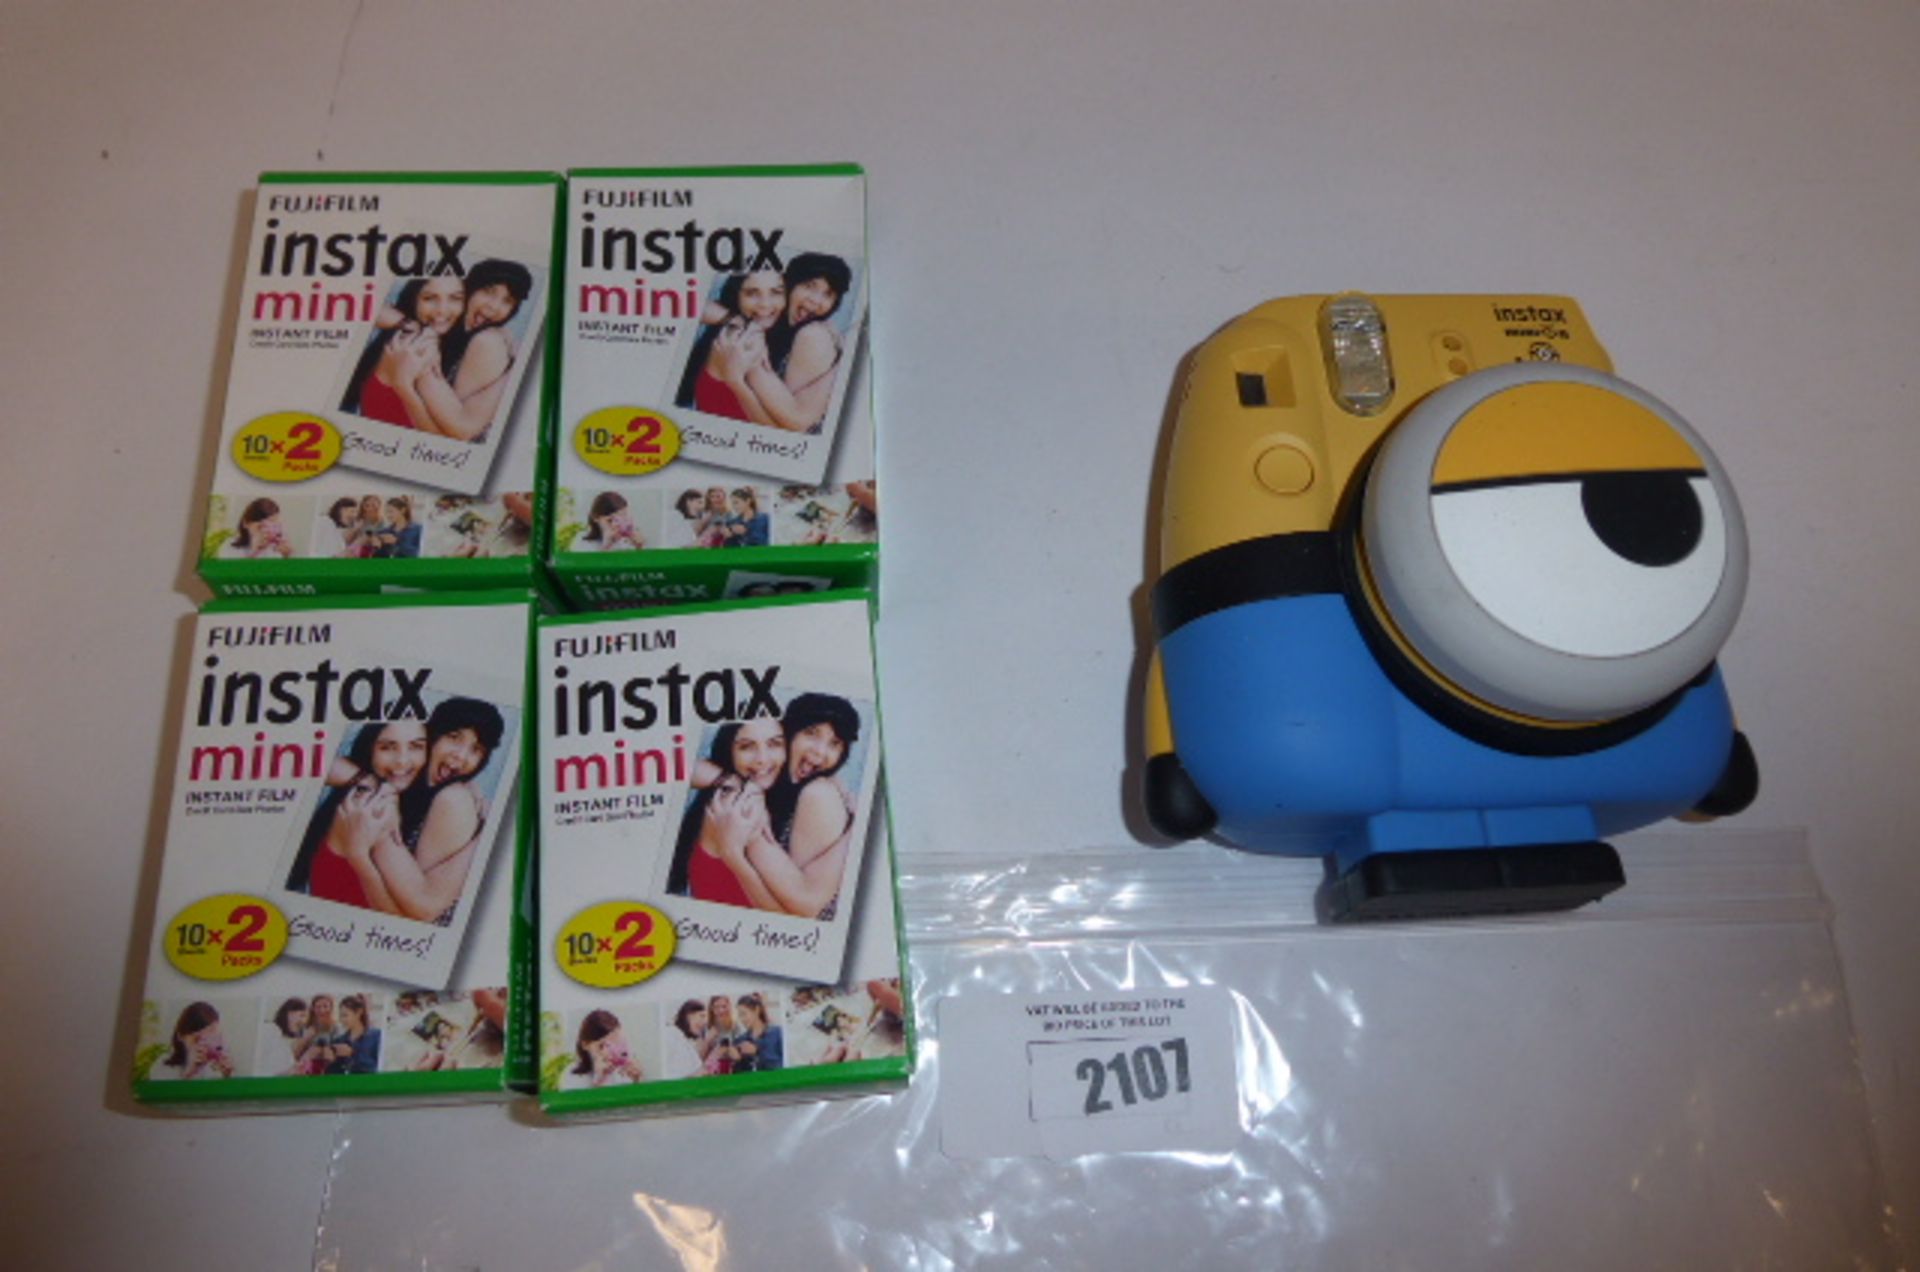 Fuji film Instax mini 8 Minion Themed camera with Four Packs of instax mini Photo paper.